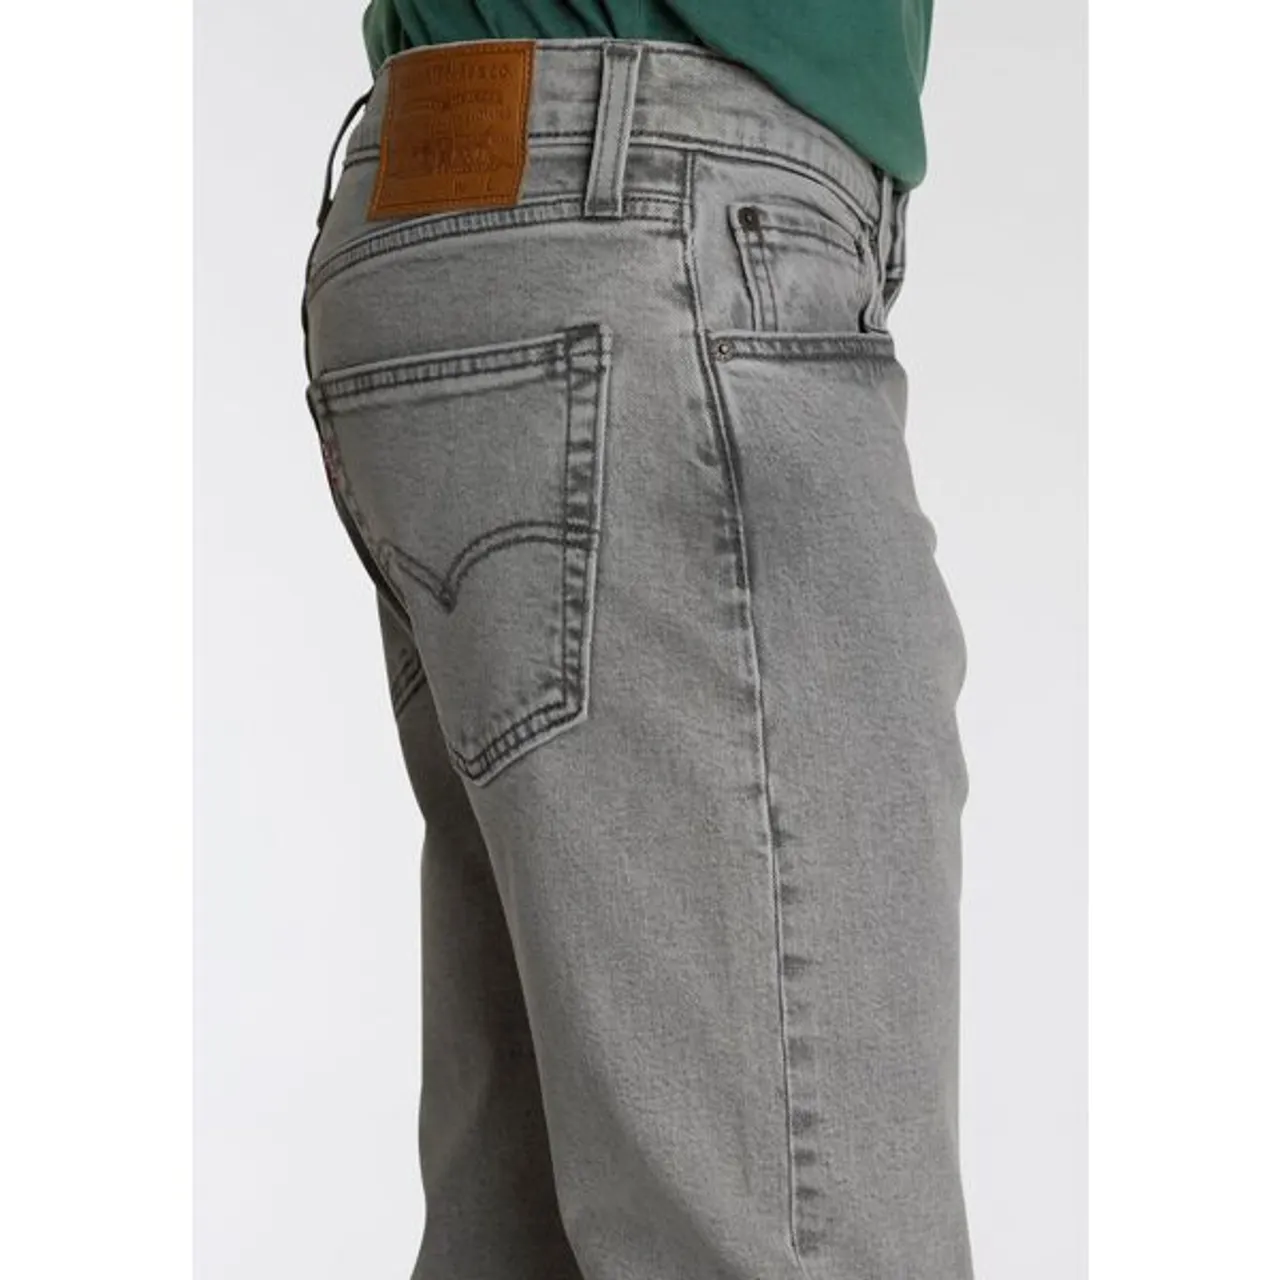 Tapered-fit-Jeans LEVI'S "502 TAPER" Gr. 32, Länge 30, grau (medium gray stonewash) Herren Jeans Tapered-Jeans